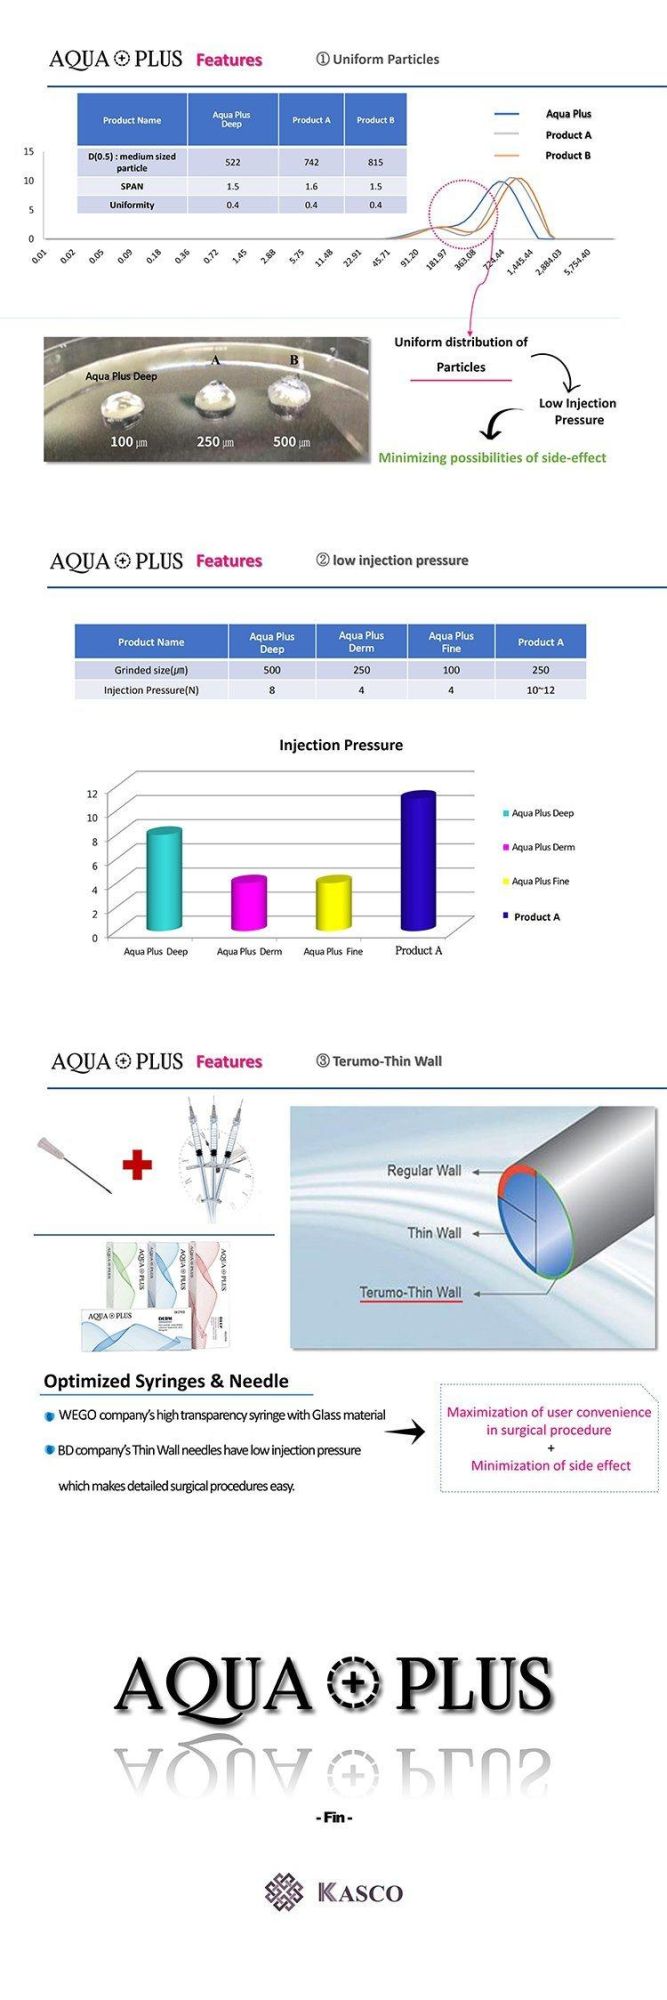 Aqua Plus Beauty Product 1ml Bd Needle Dermal Filler Injections Hyaluronic Acid Anti Wrinkle